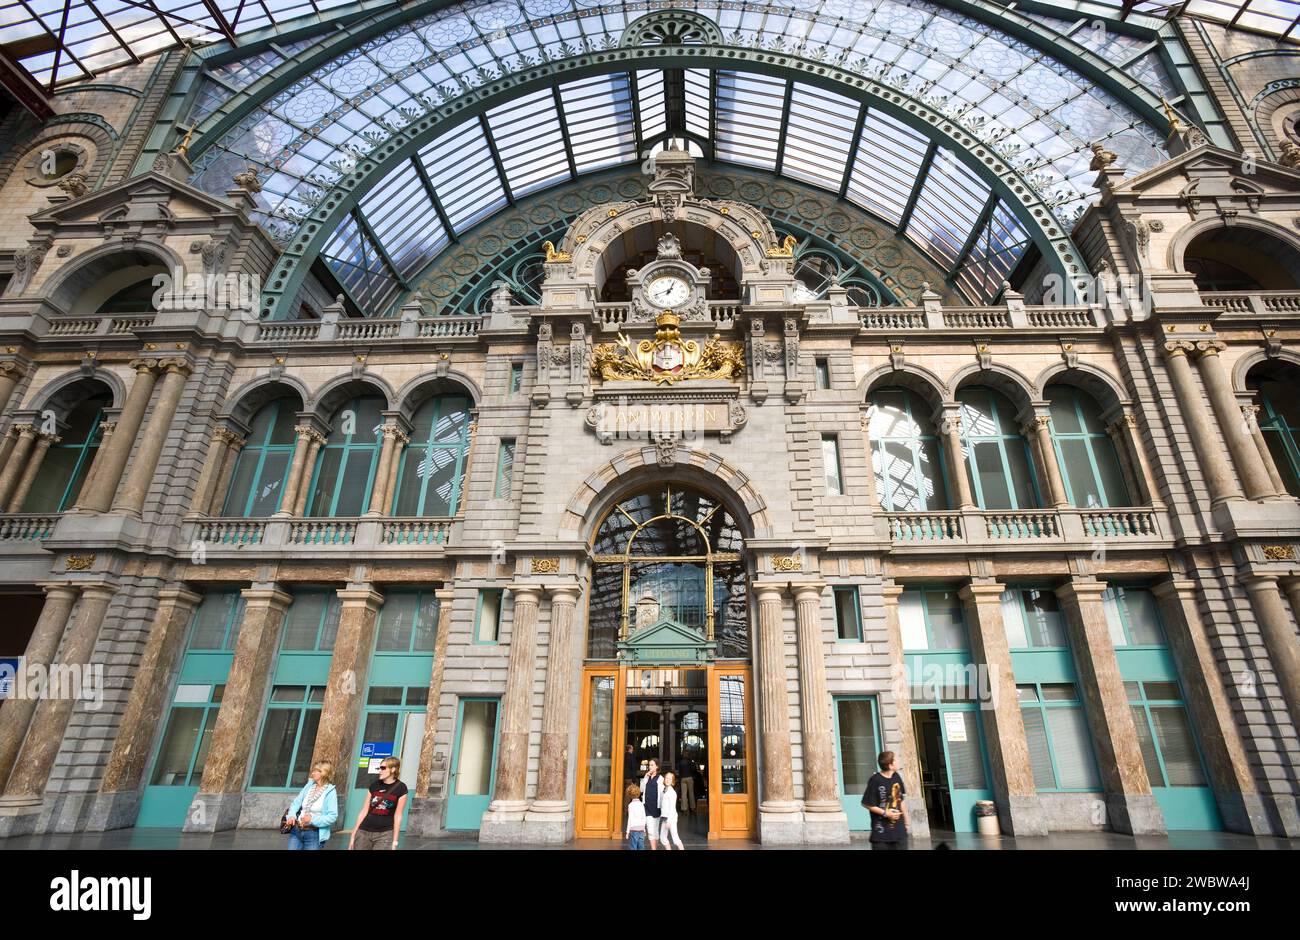 Antwerpen-Centraal railway station, upper level, Koningin Astridplein, Antwerp,  Flanders, Belgium, Europe Stock Photo